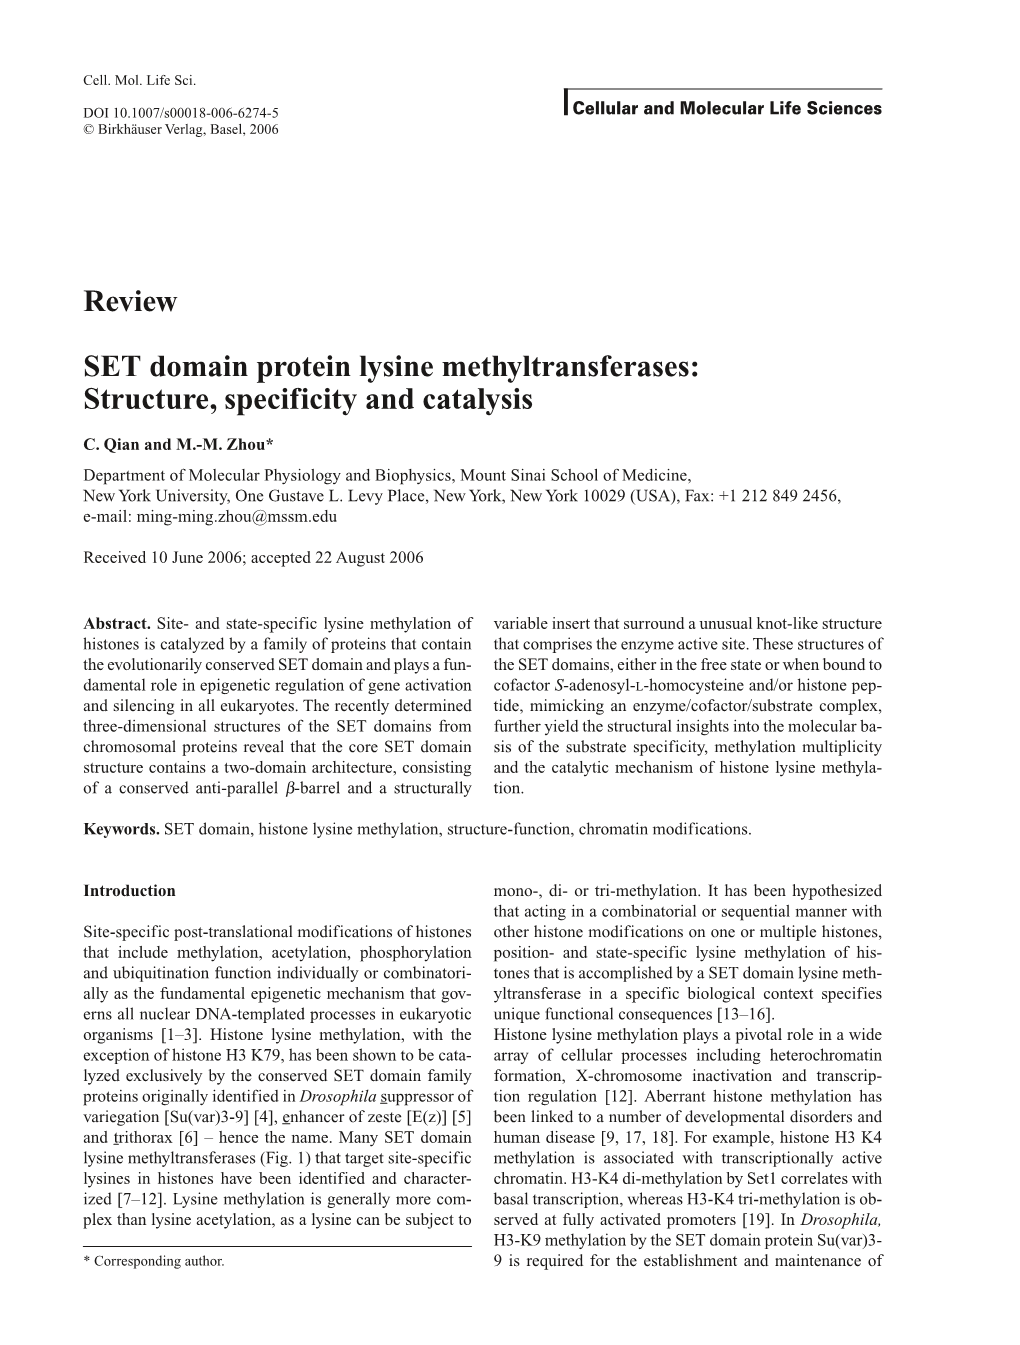 Review SET Domain Protein Lysine Methyltransferases